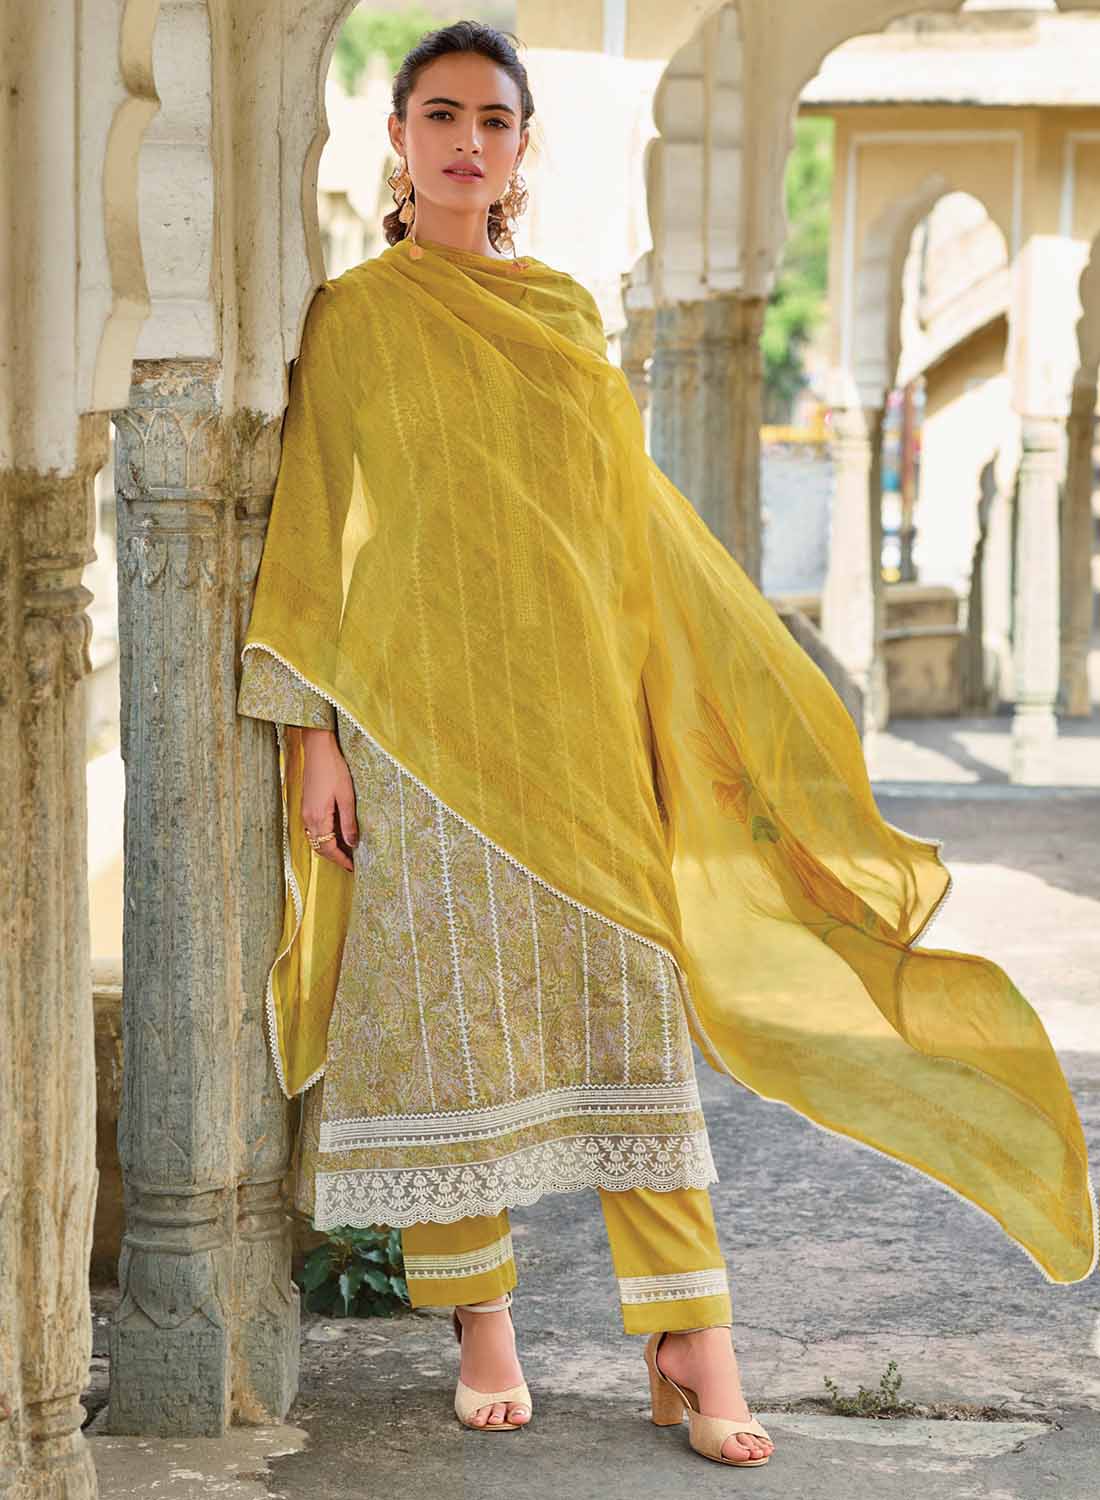 Kilory Pure Lawn Cotton Unstitched Salwar Suit Fabric for Women